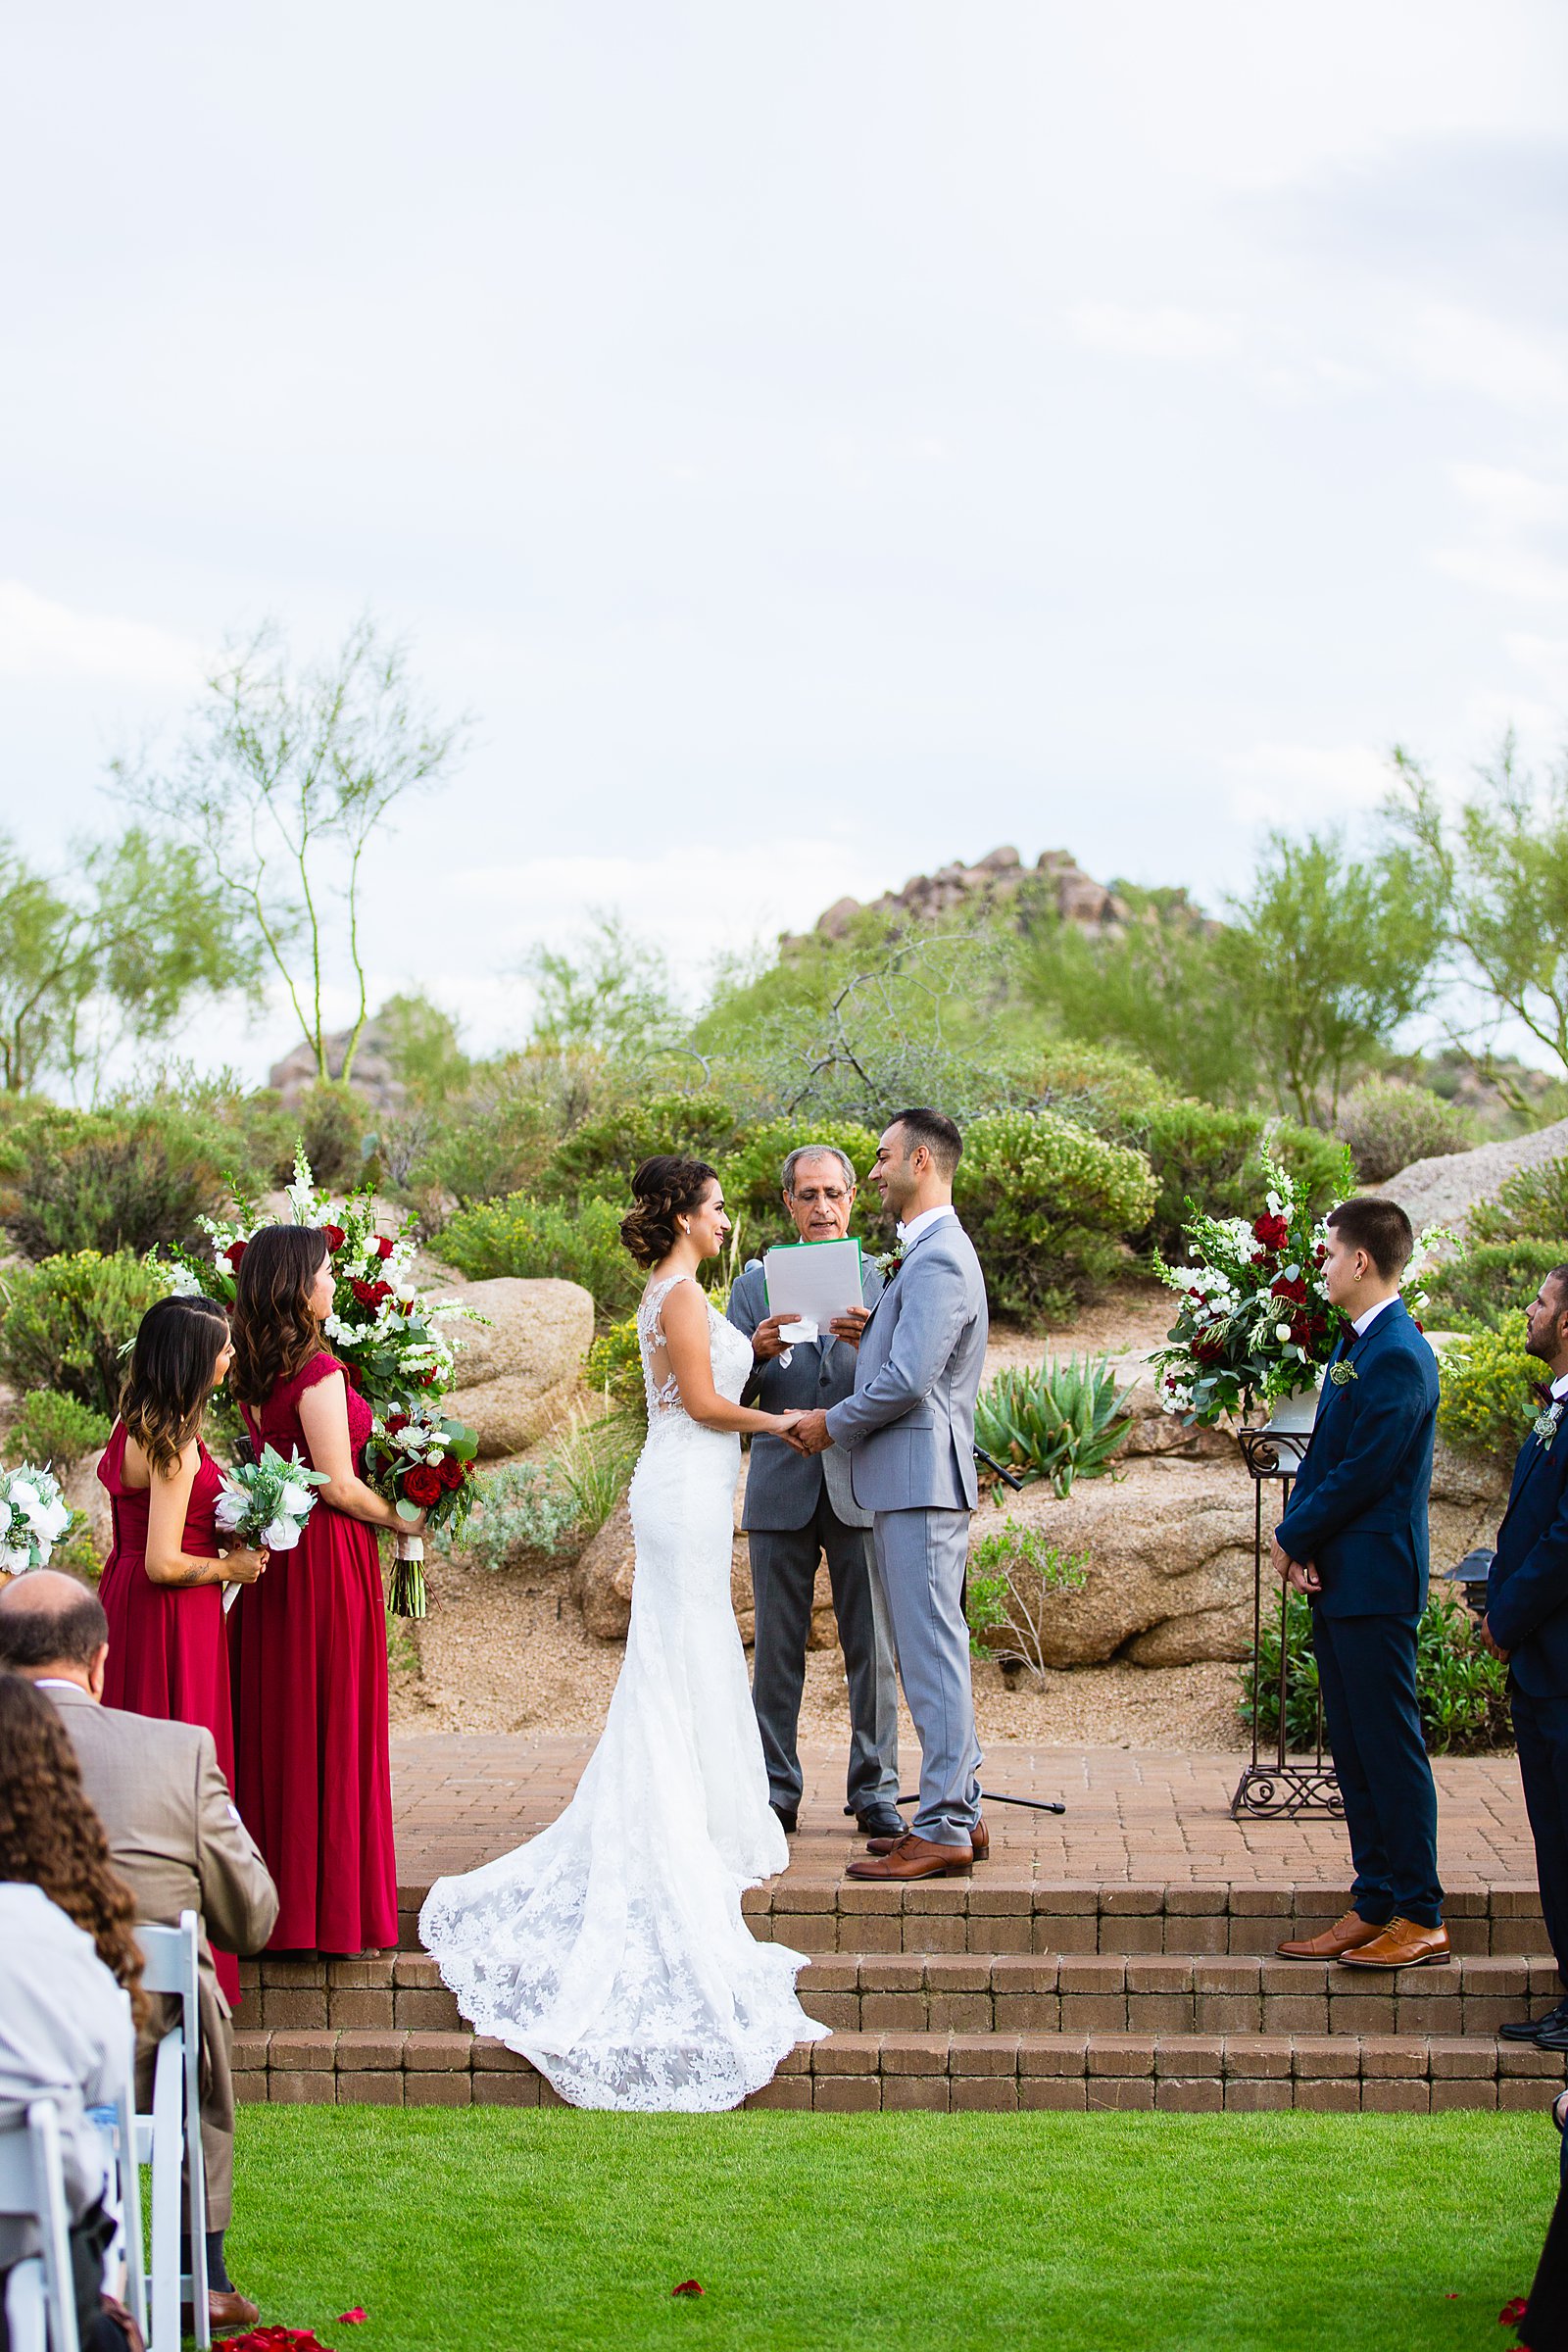 Wedding ceremony at Troon North by Arizona wedding photographer PMA Photography.